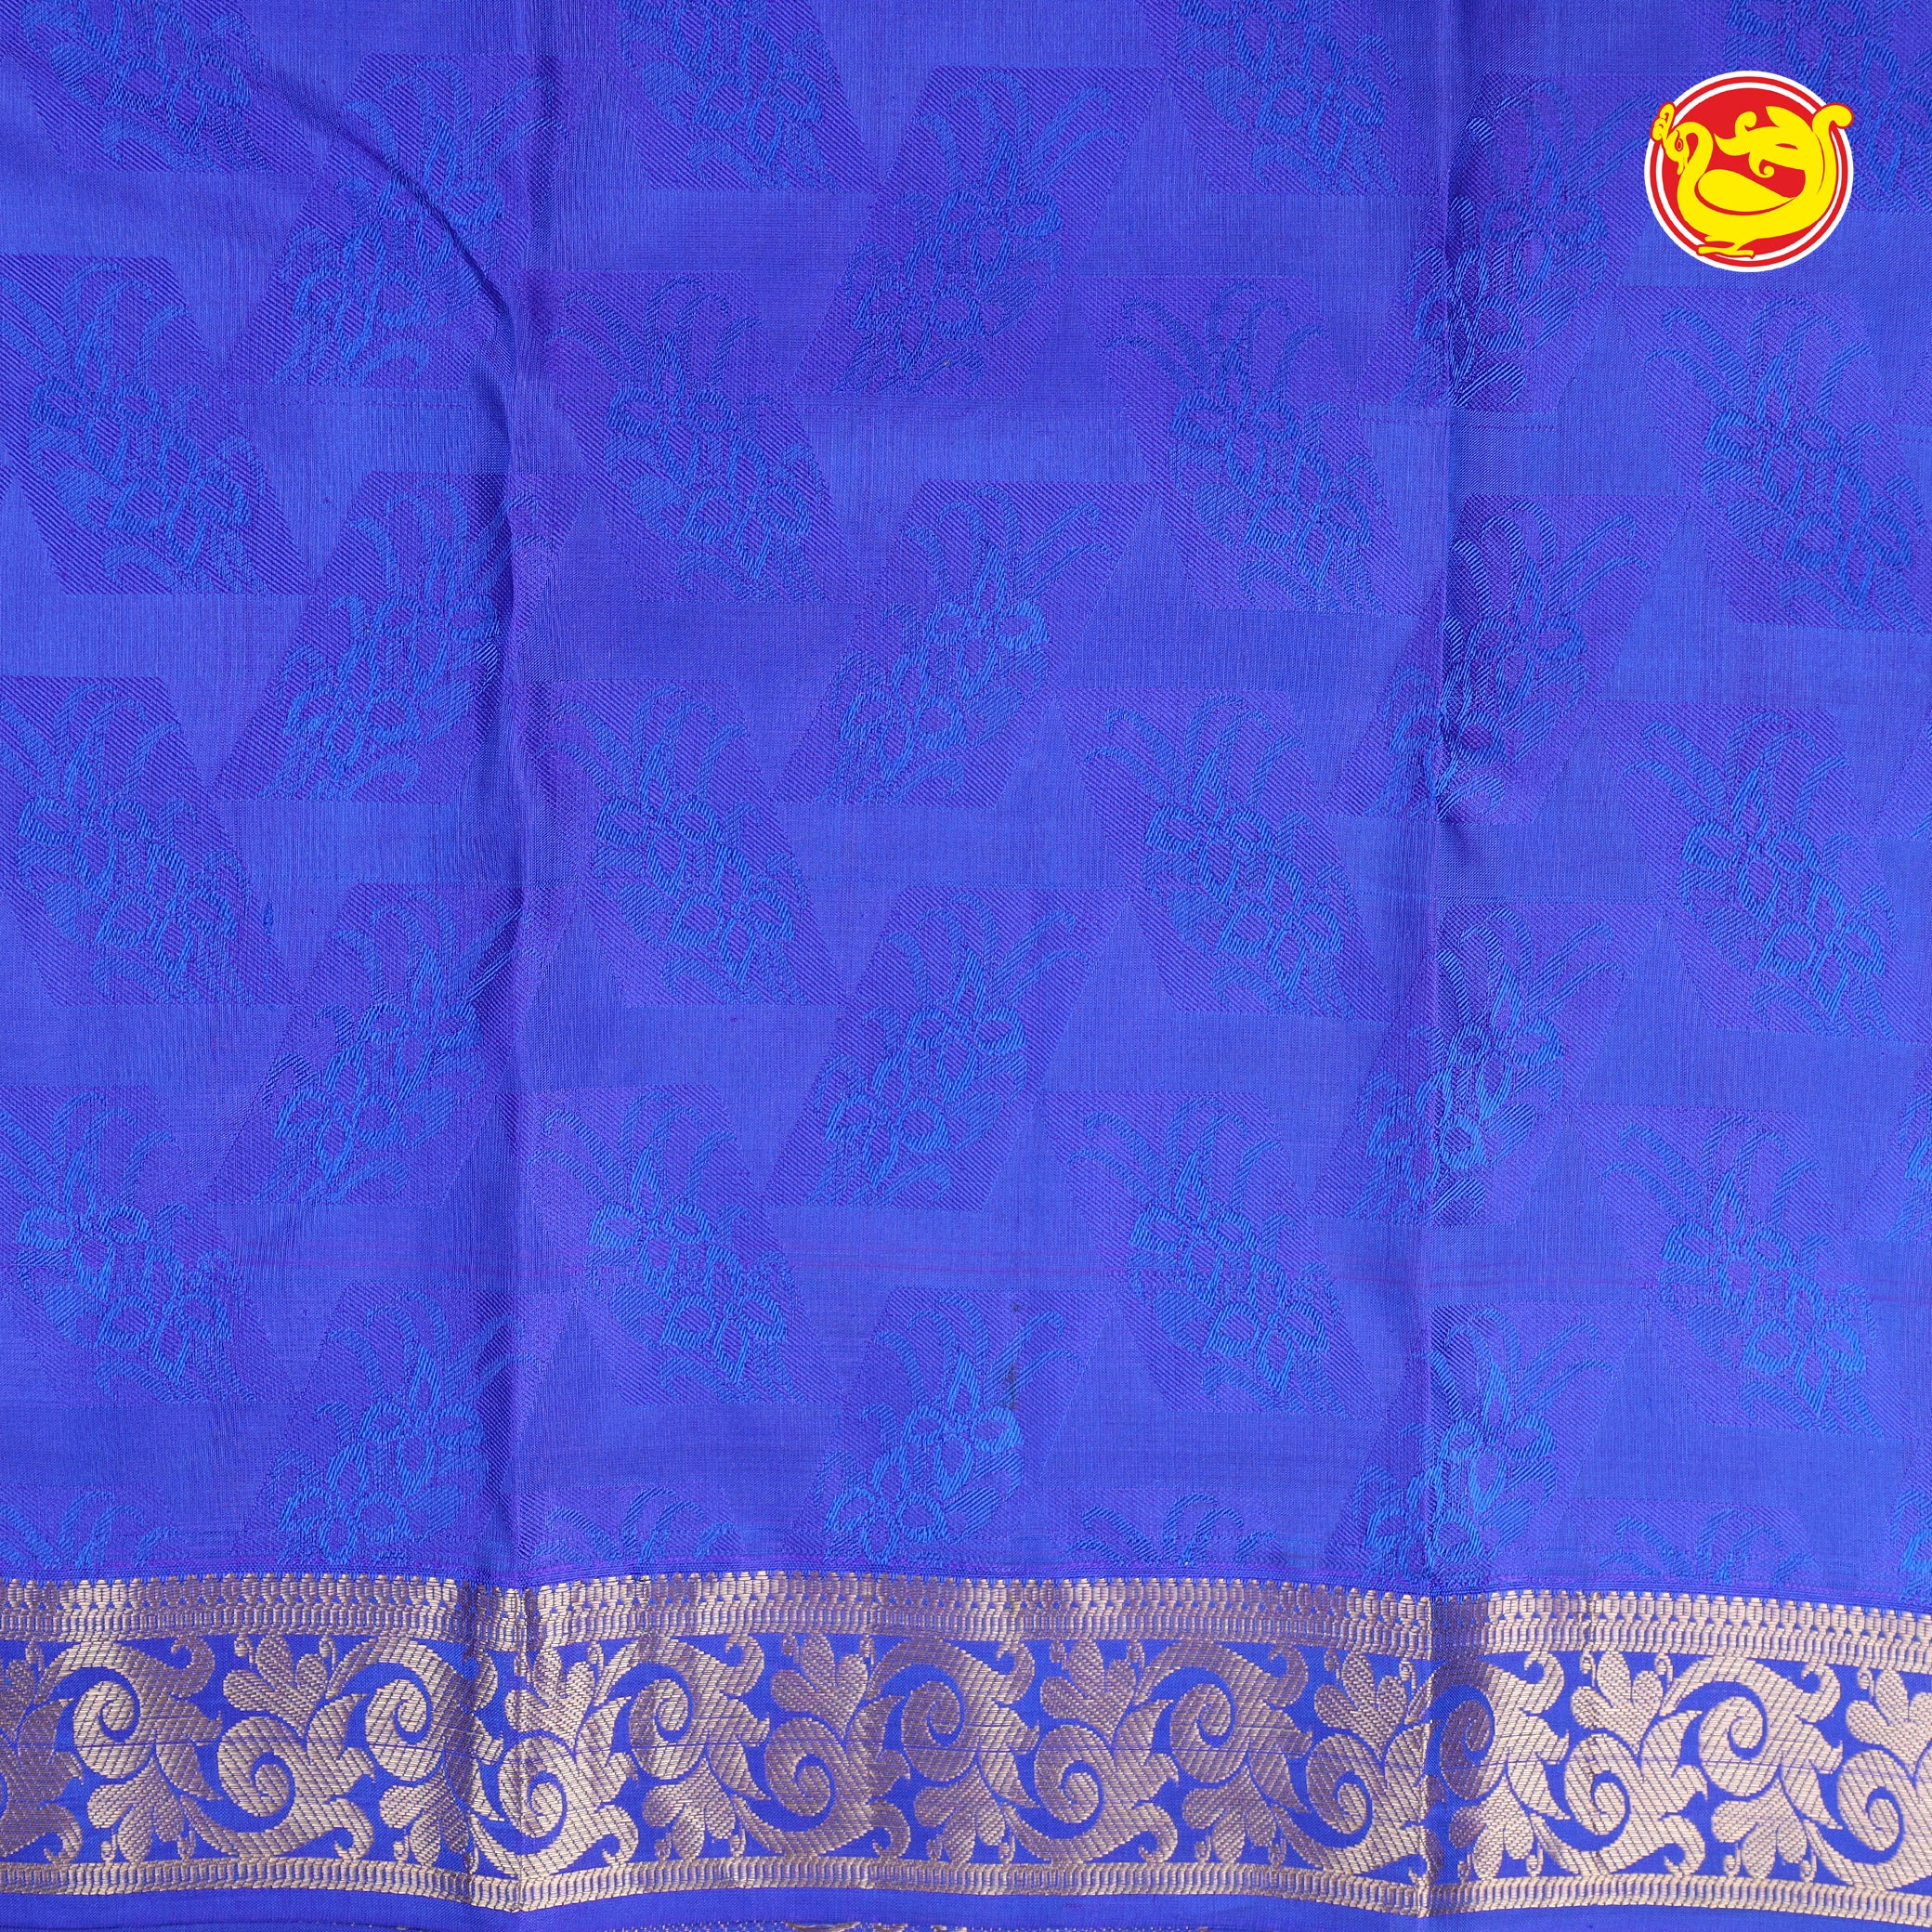 Rani pink with blue embossed silk saree